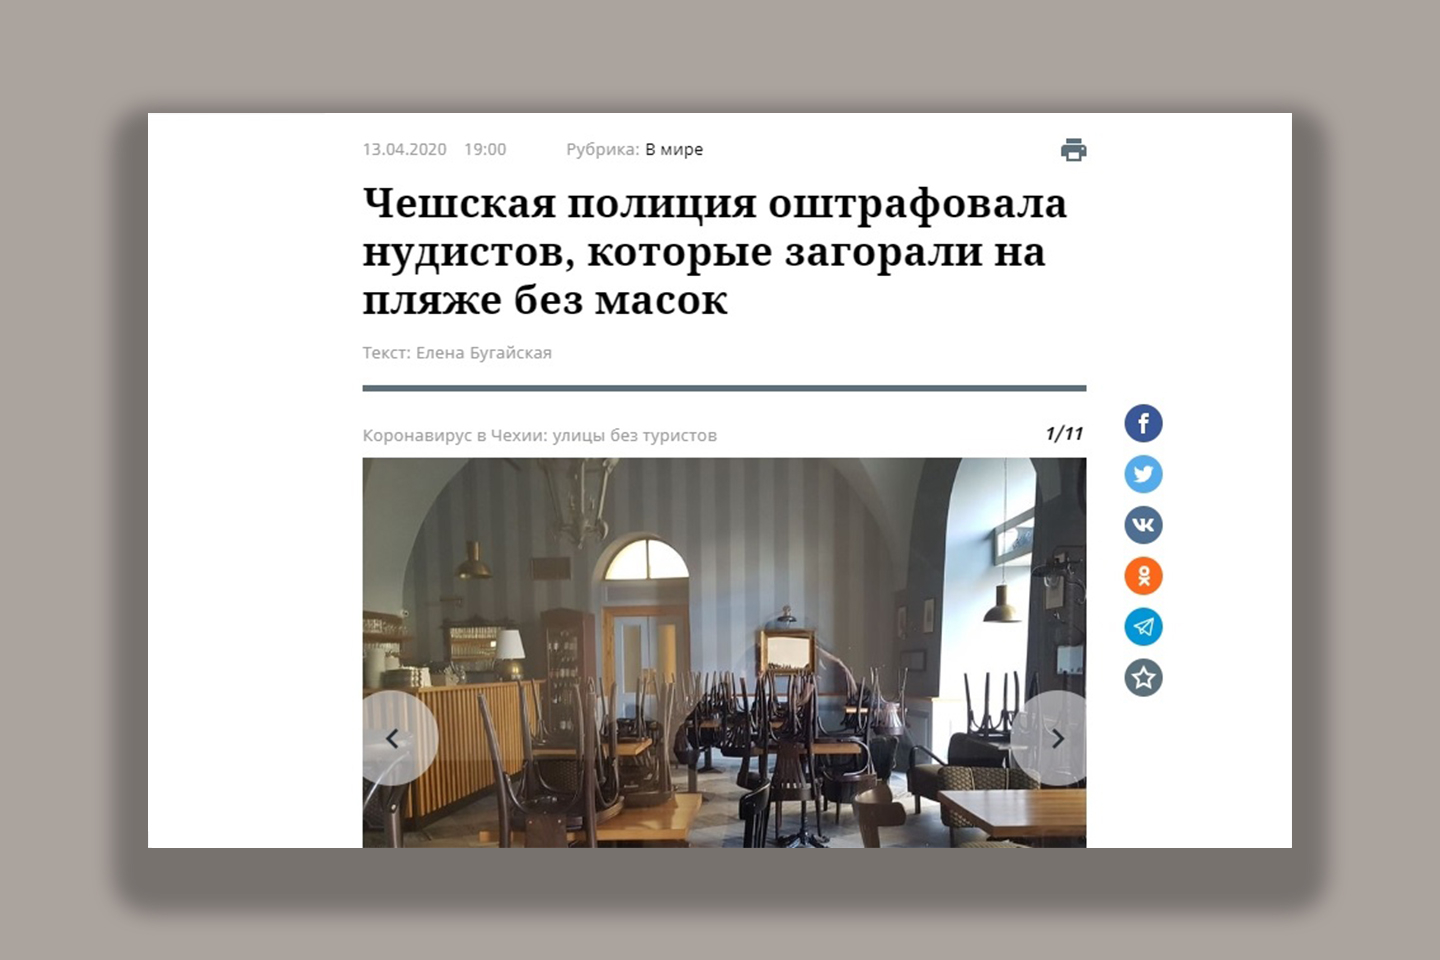 Скриншот rg.ru